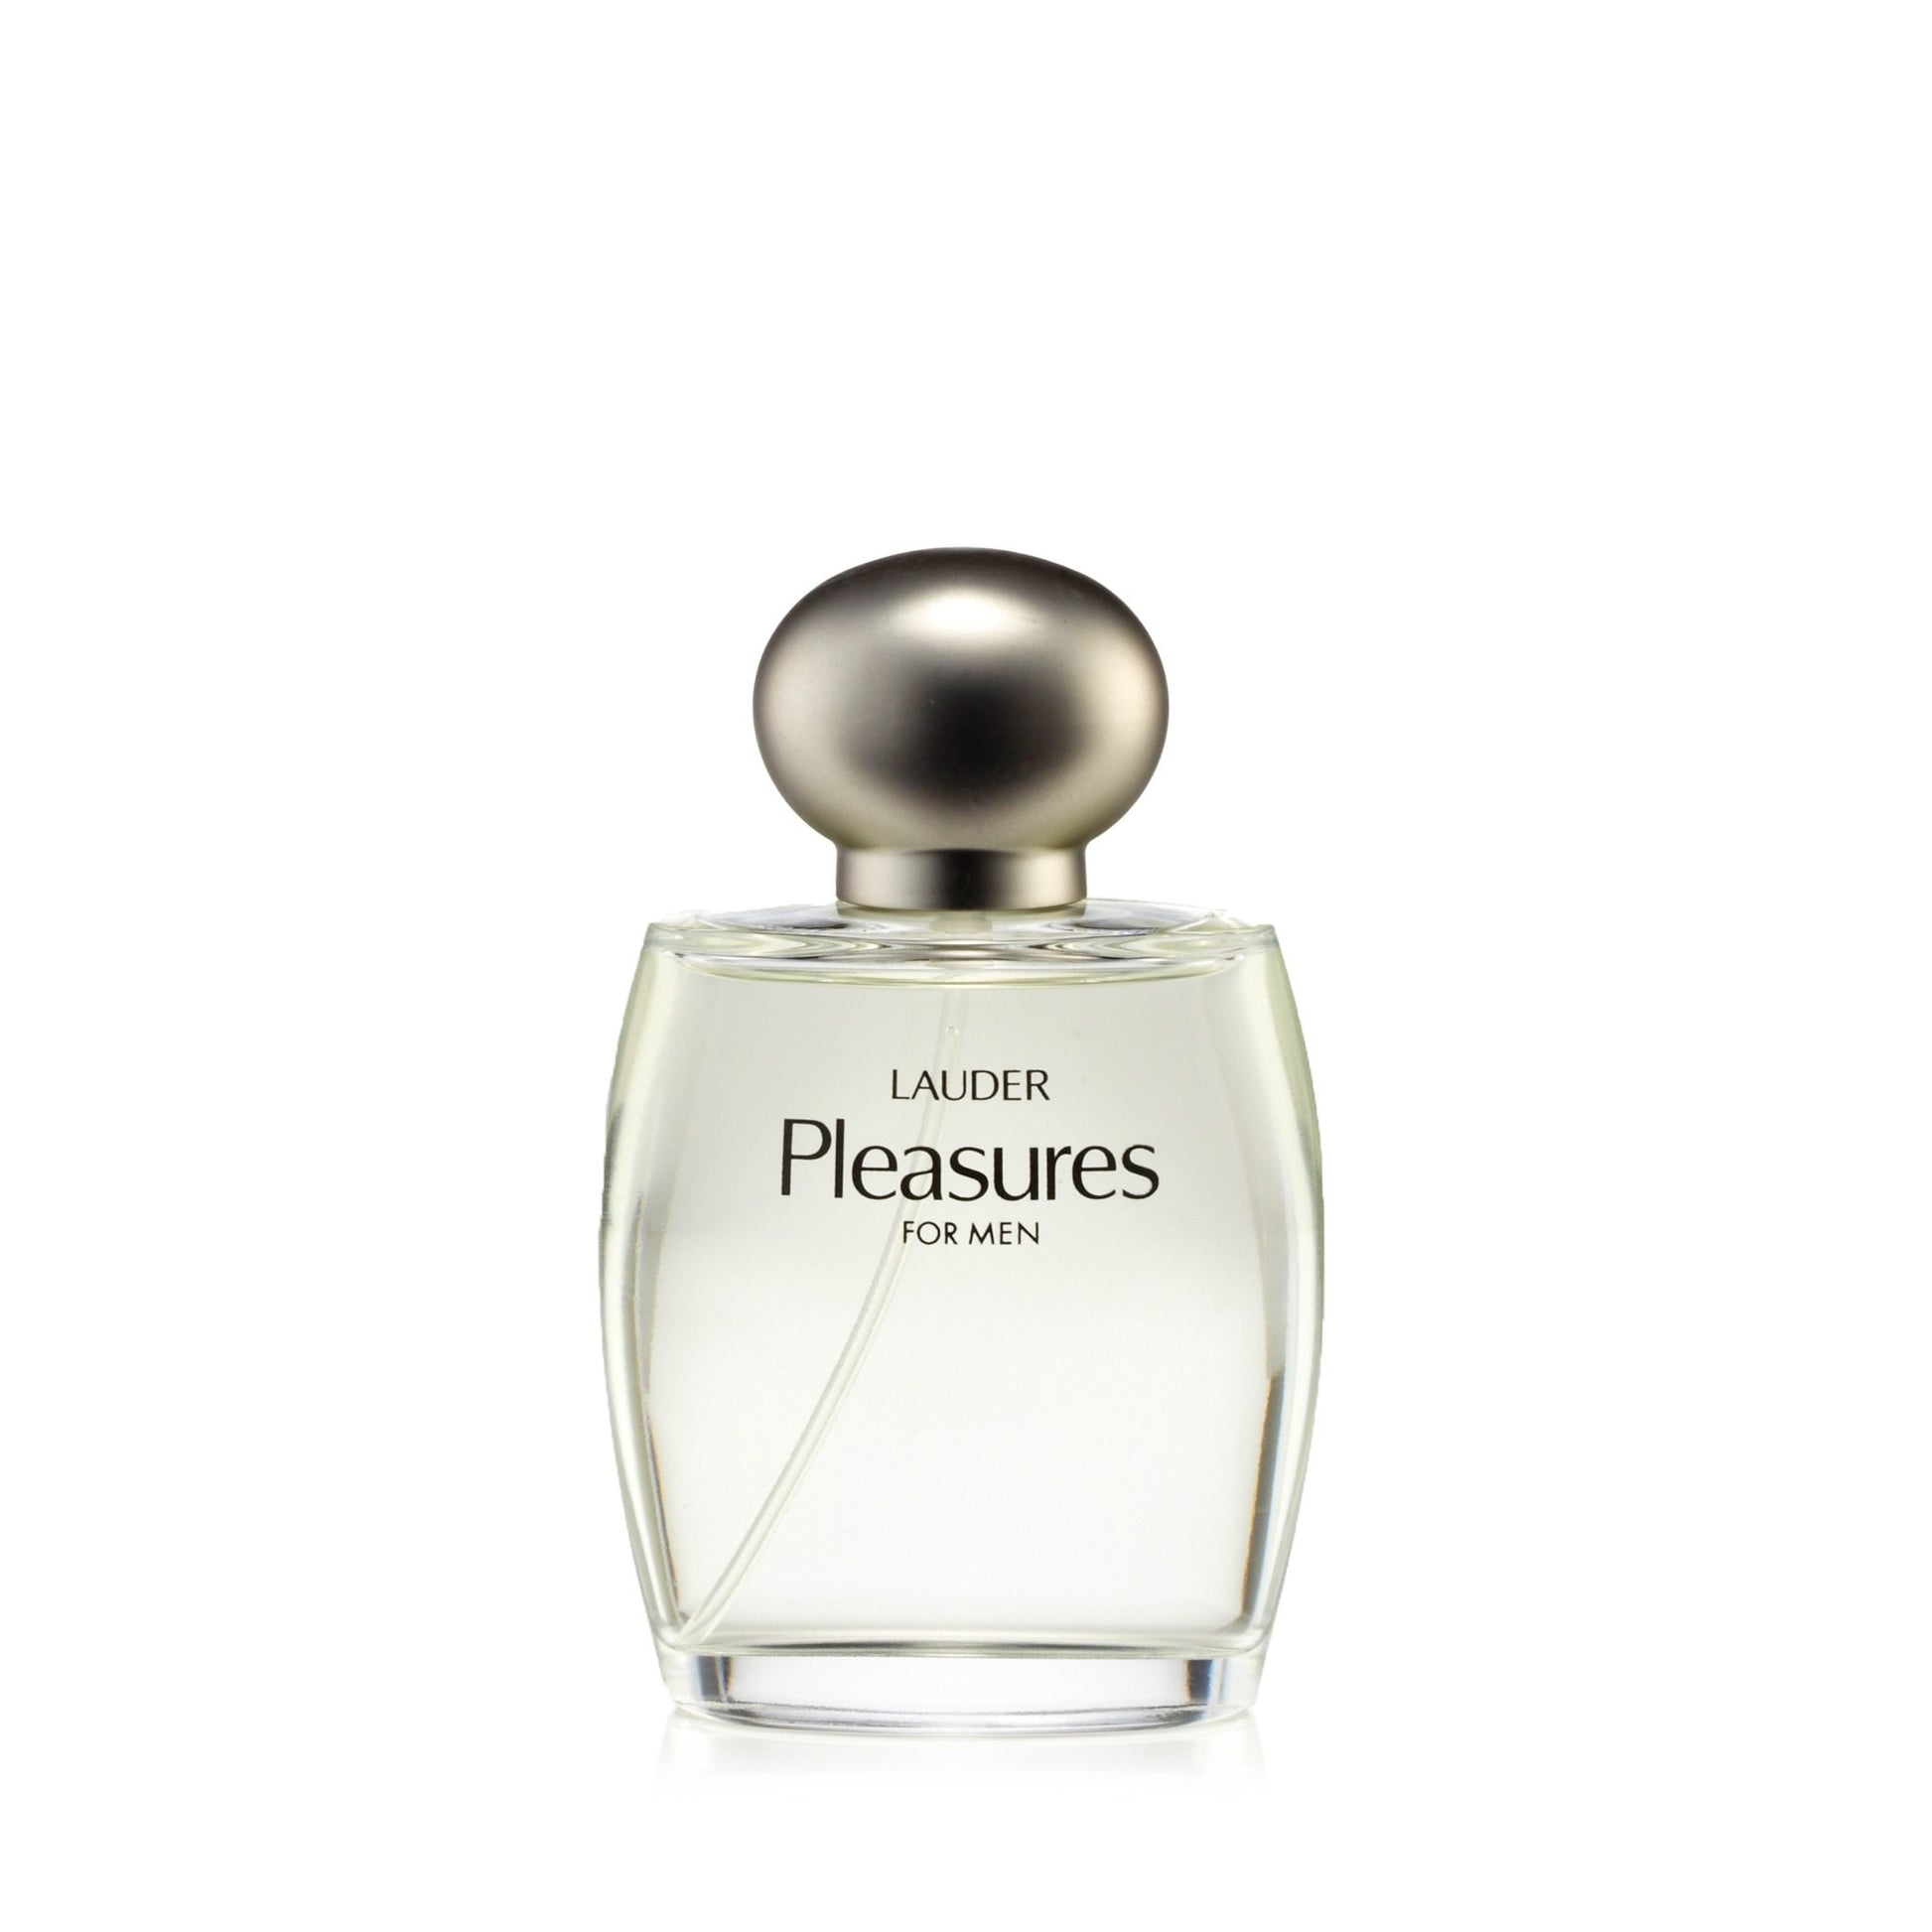  Pleasures Eau de Parfume Spray for Men by Estee Lauder 3.4 oz. Click to open in modal